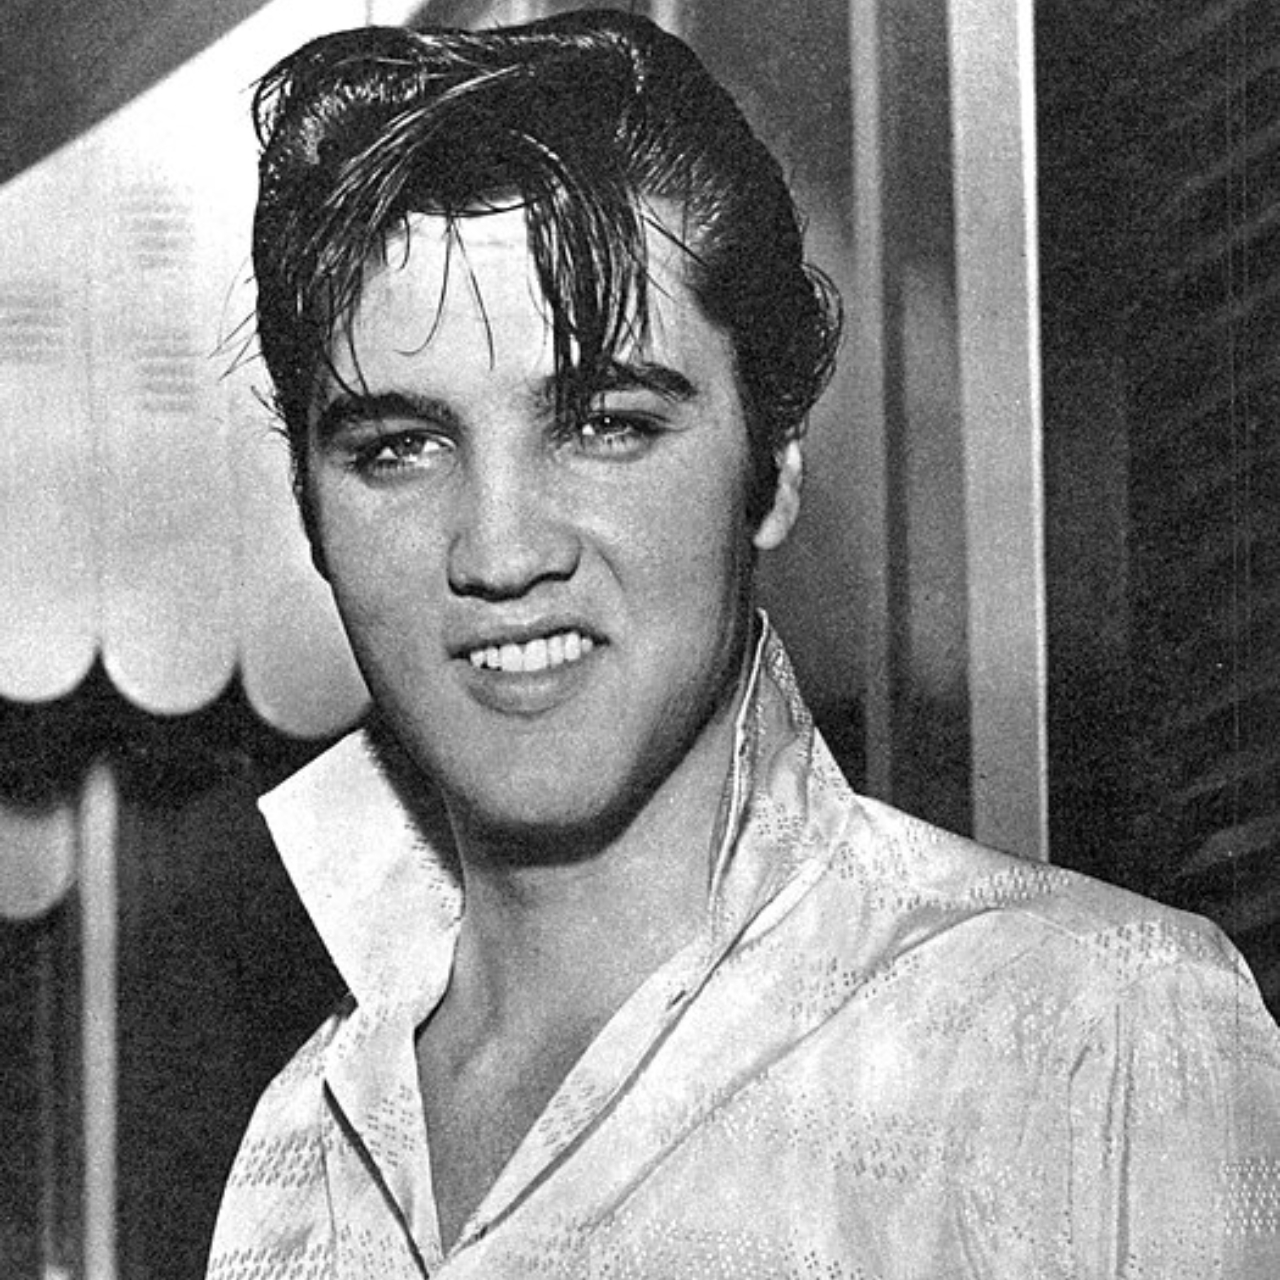 Fotografia antiga de Elvis Presley